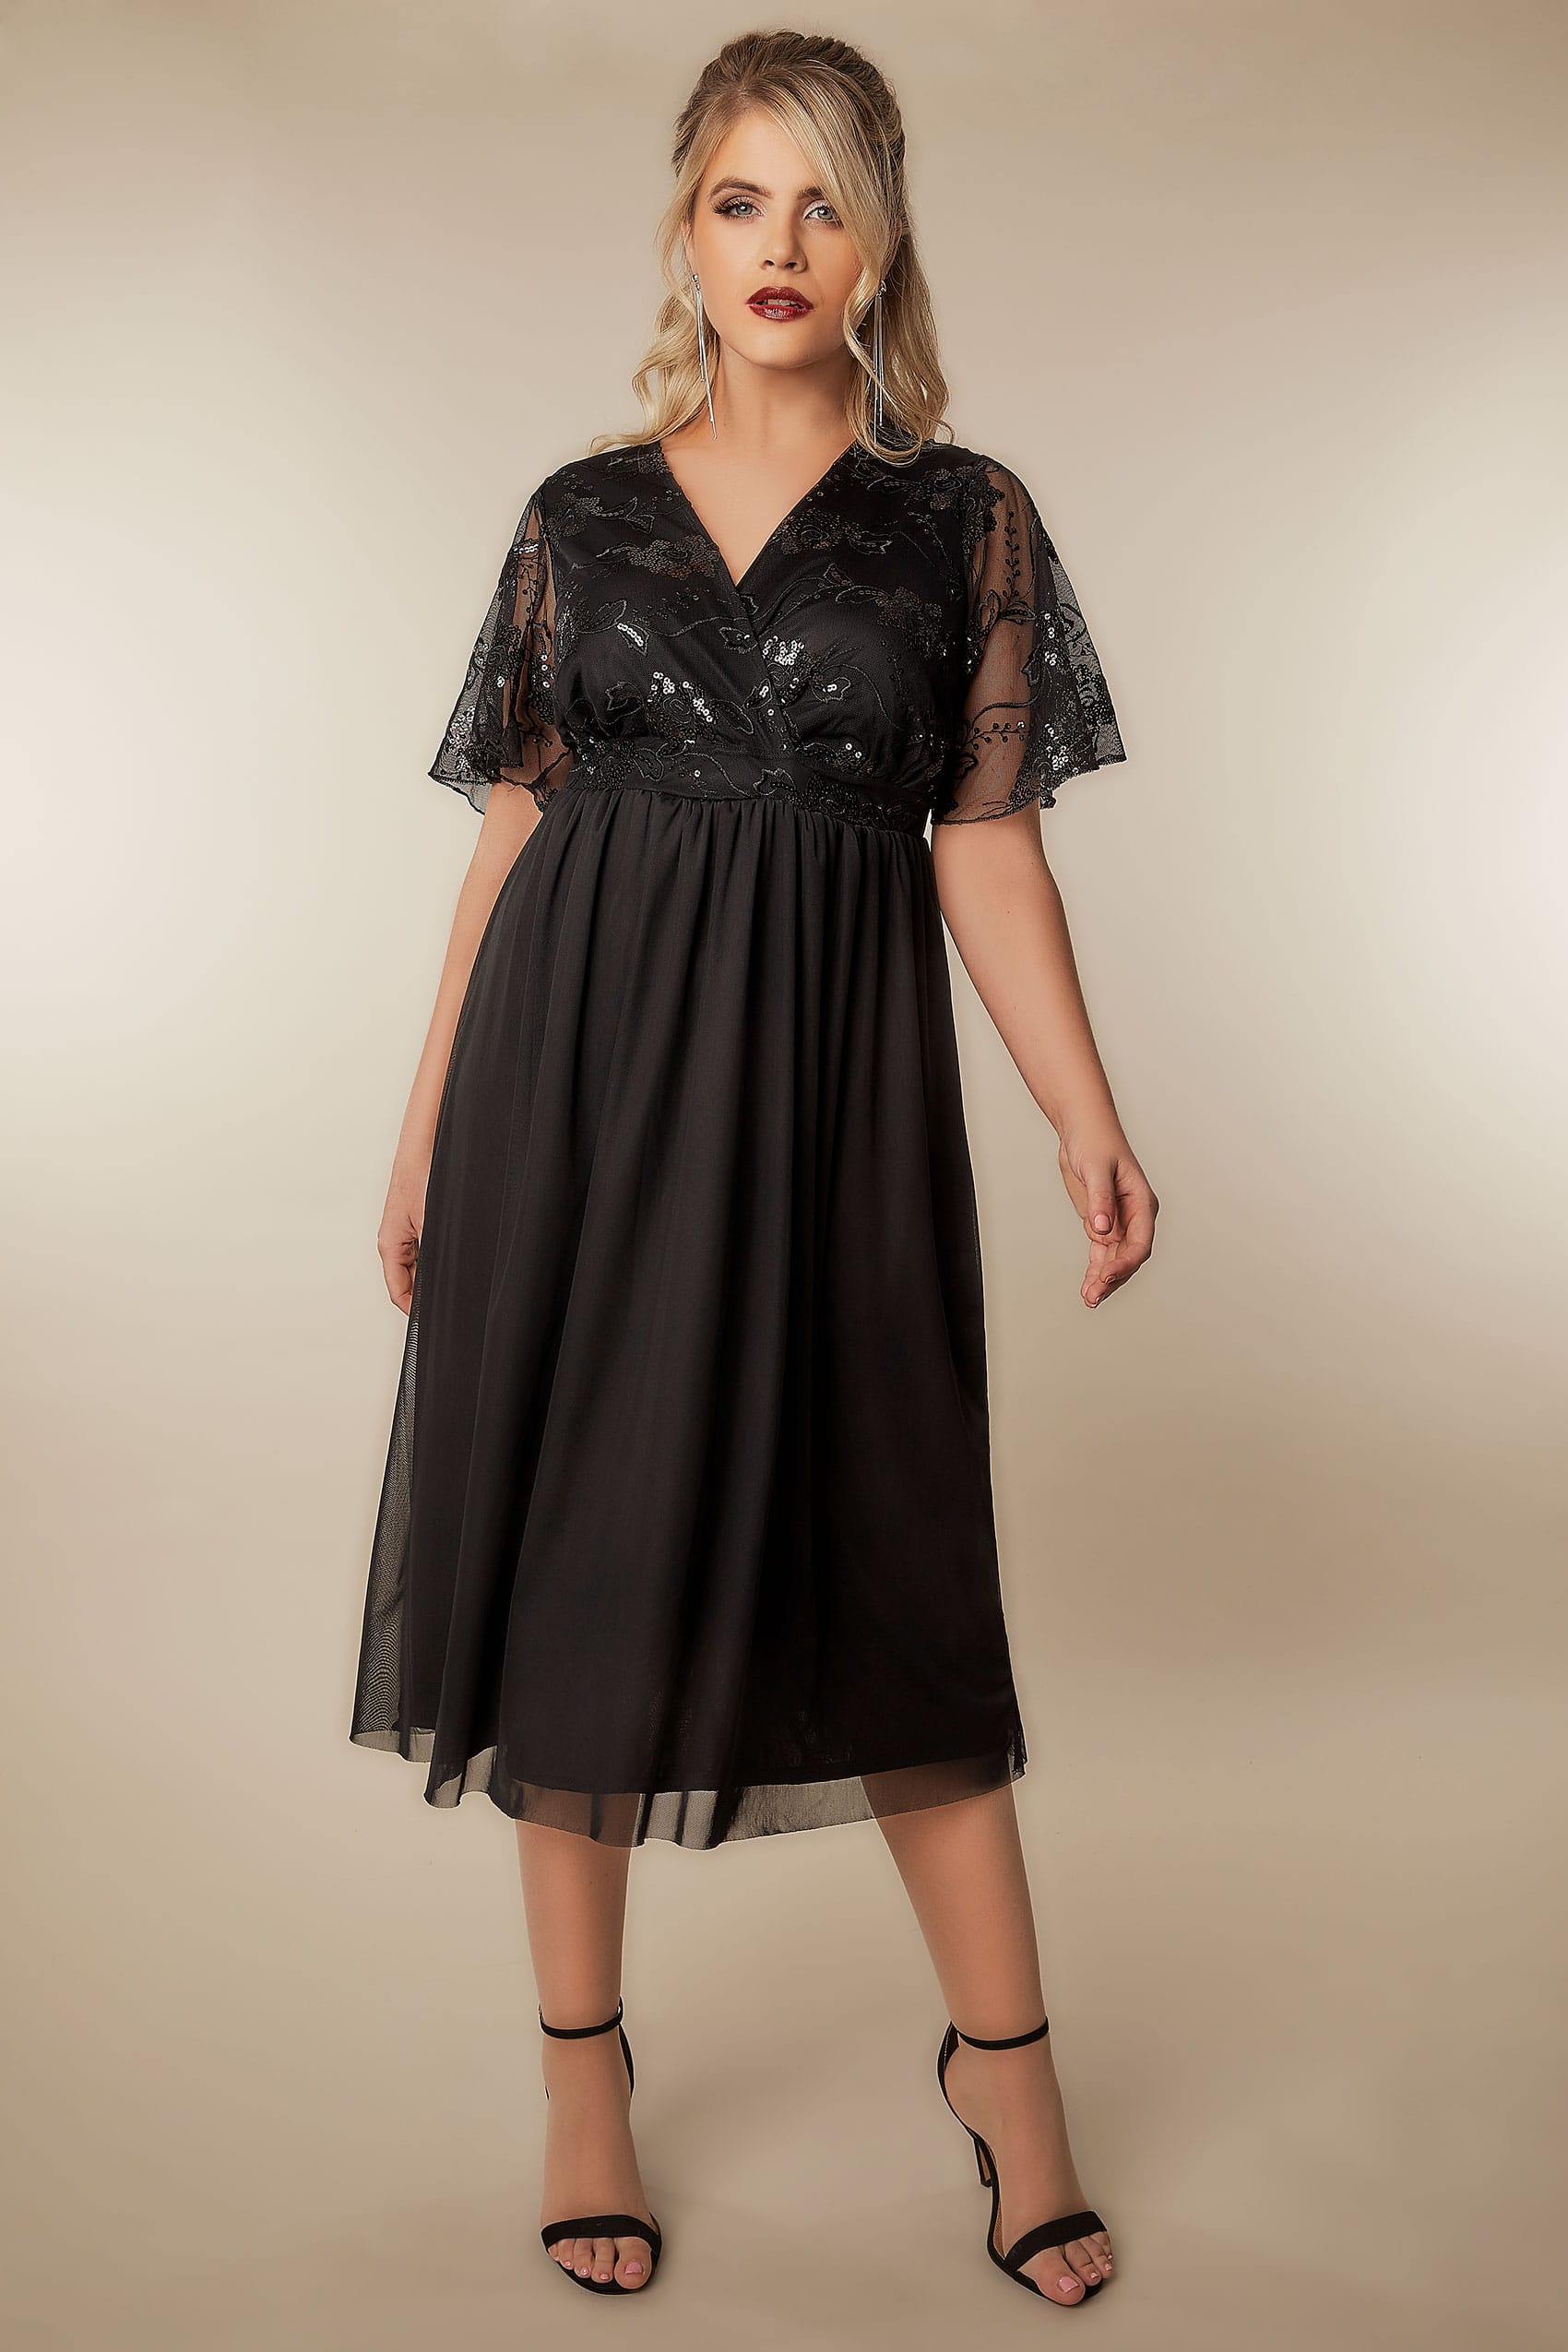 Black Mesh Midi Dress With Sequin Embellishment, Plus size 